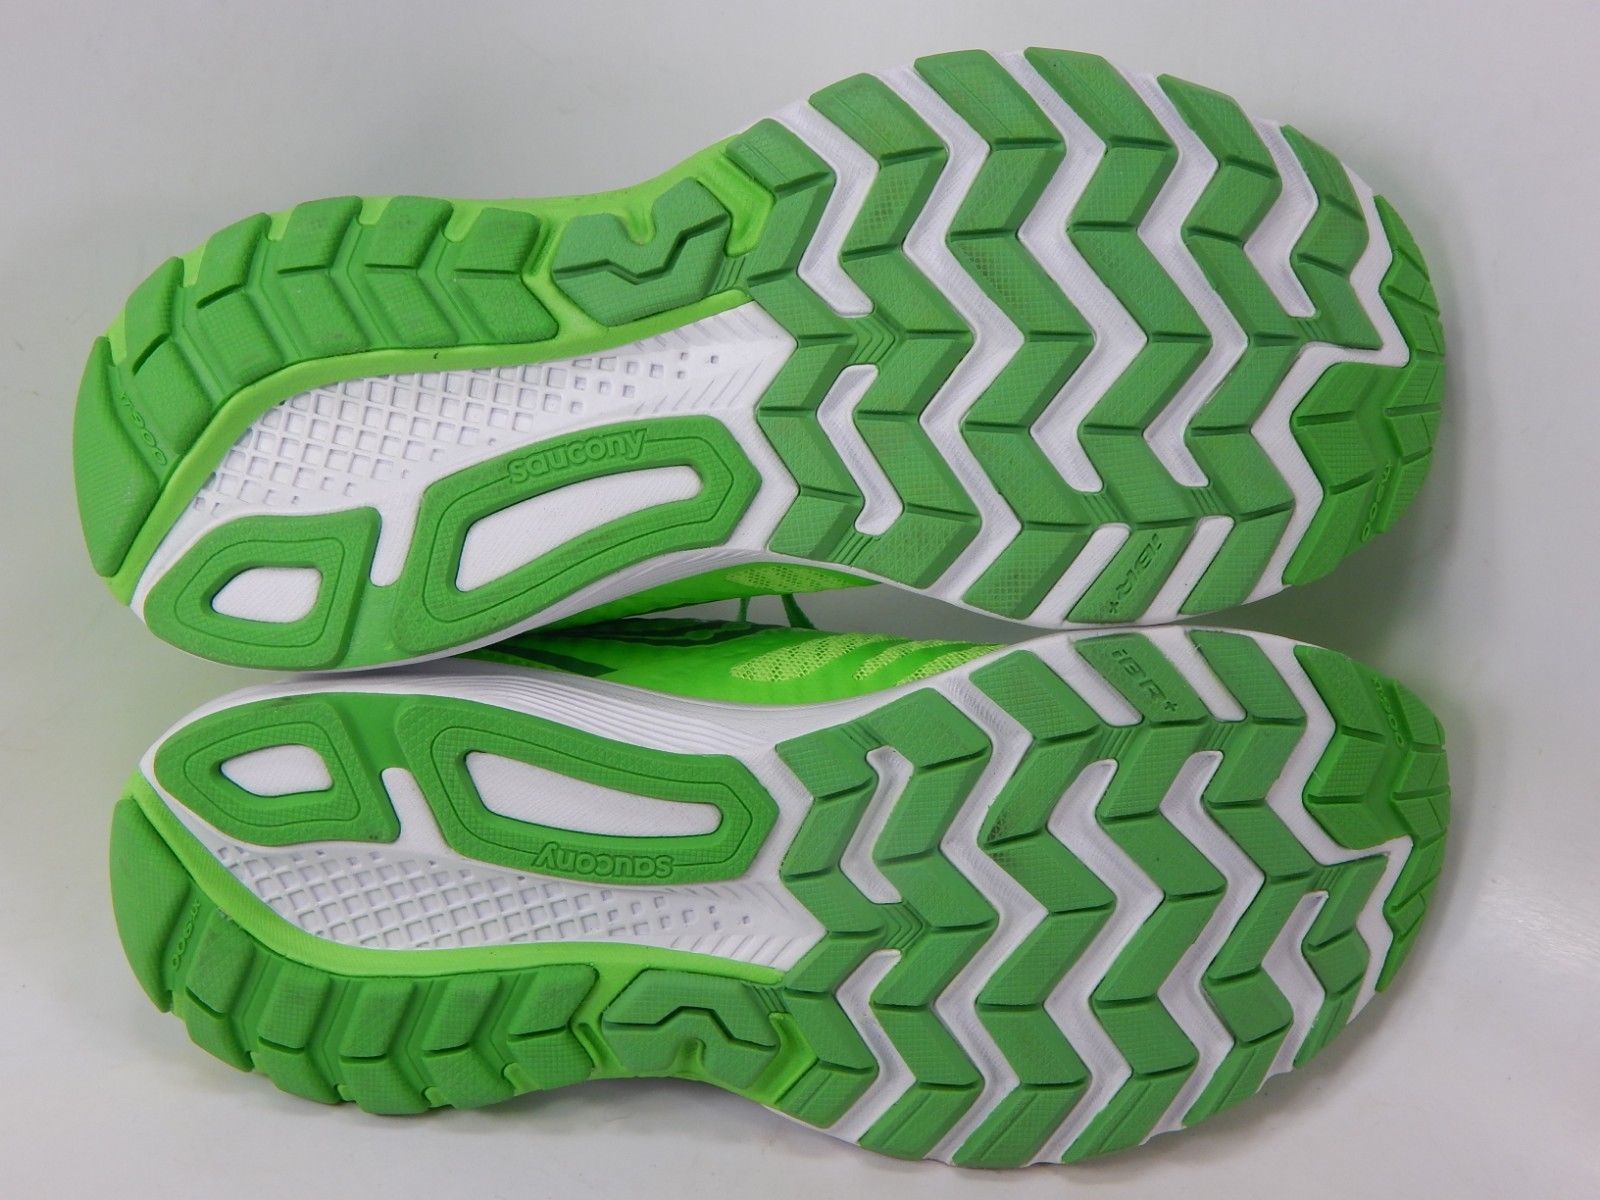 Saucony Ride 9 Size 8 M (B) EU 39 Women's Running Shoes Green Lime ...